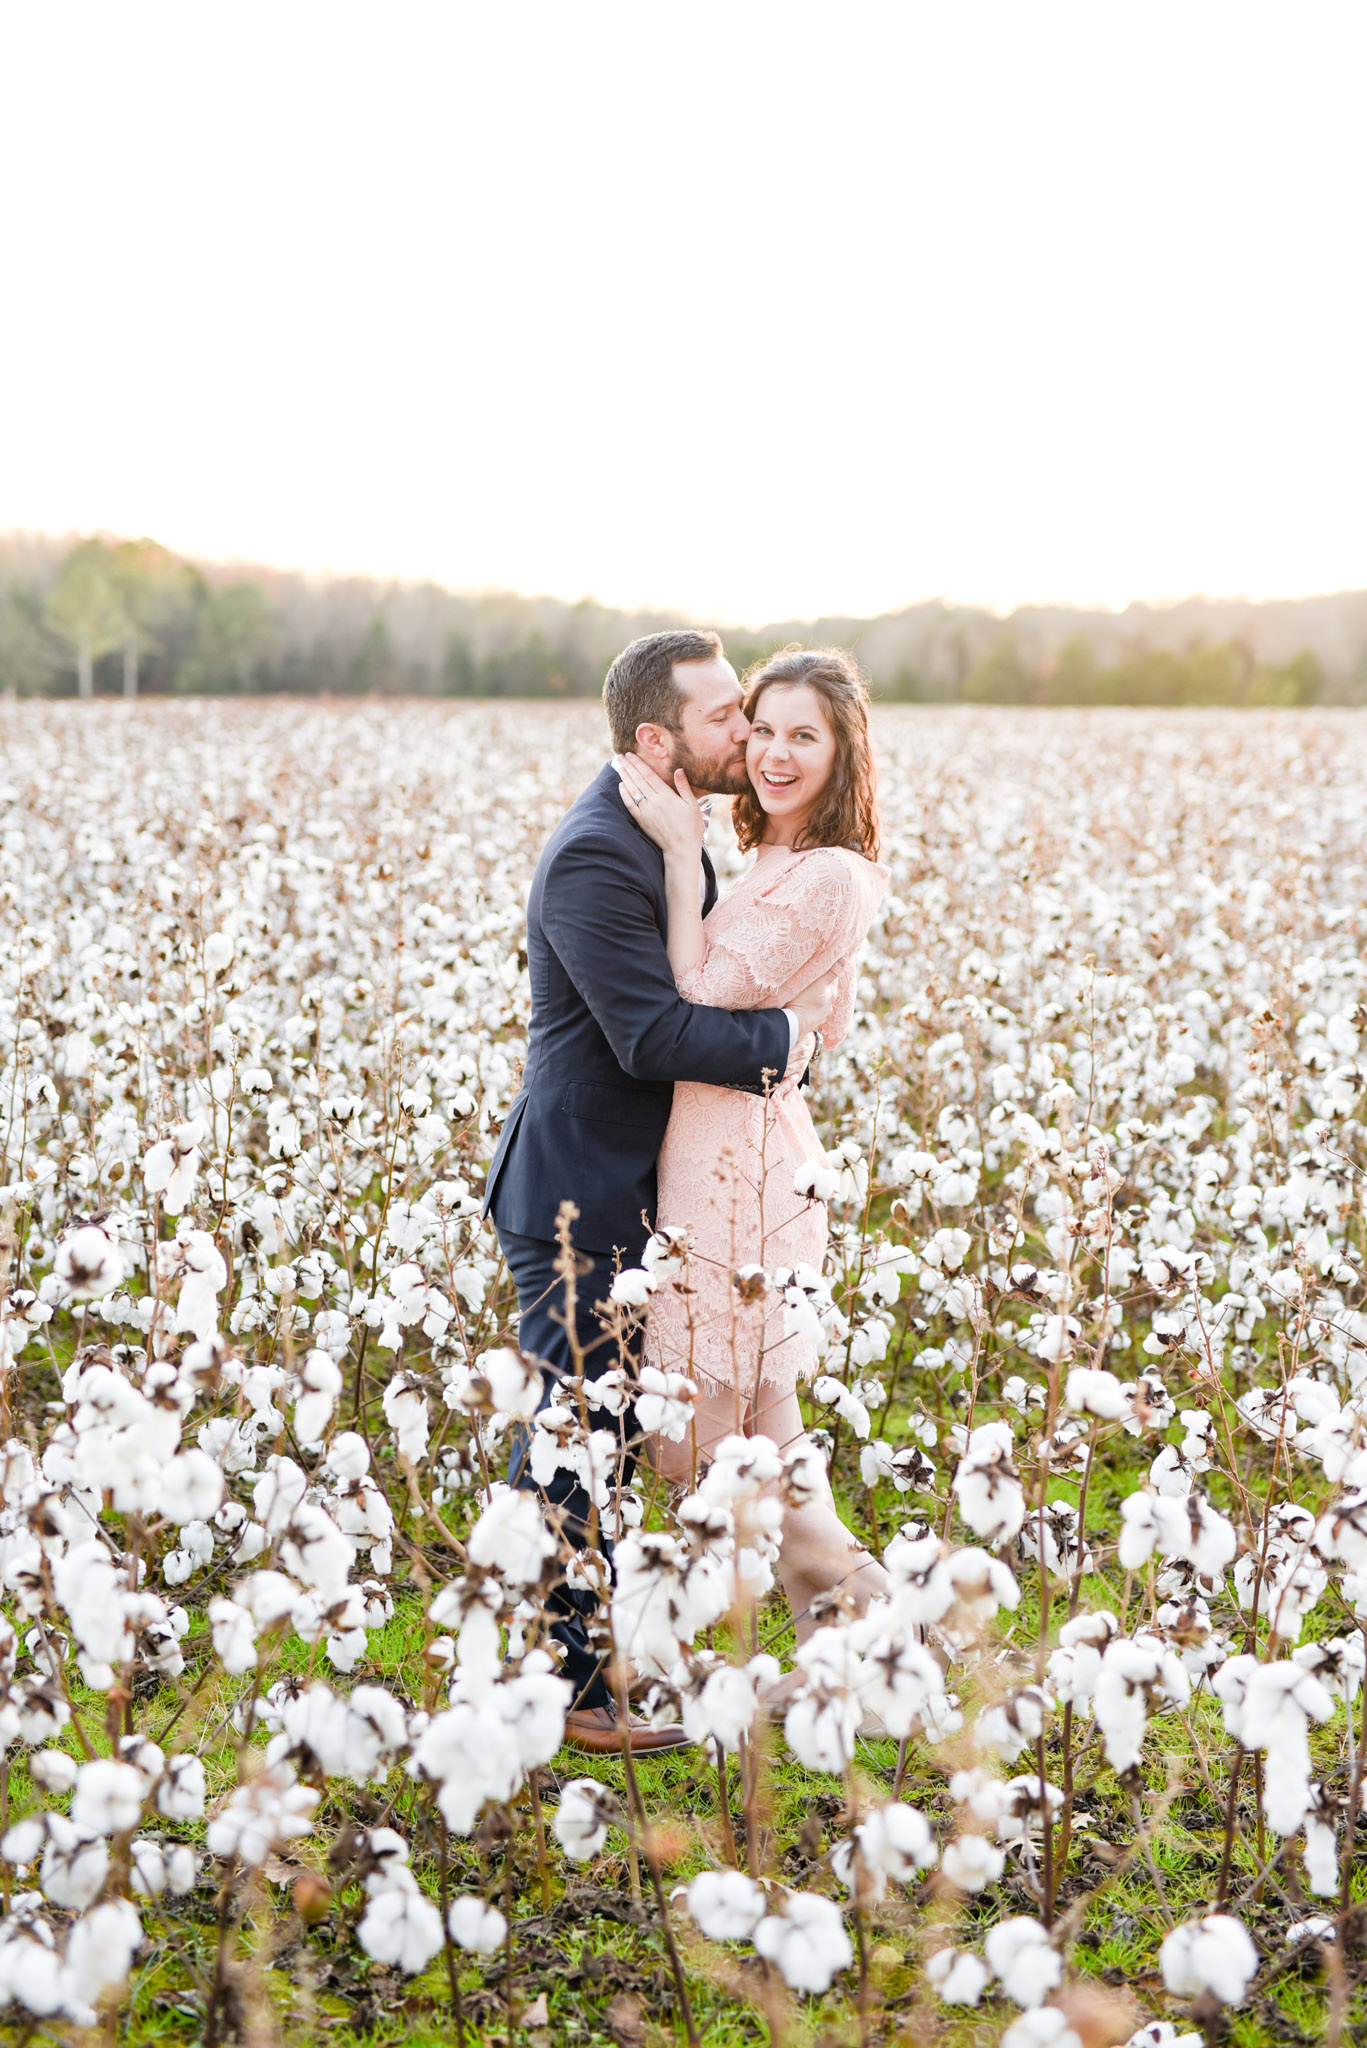 Man kisses woman's cheek in cotton field.